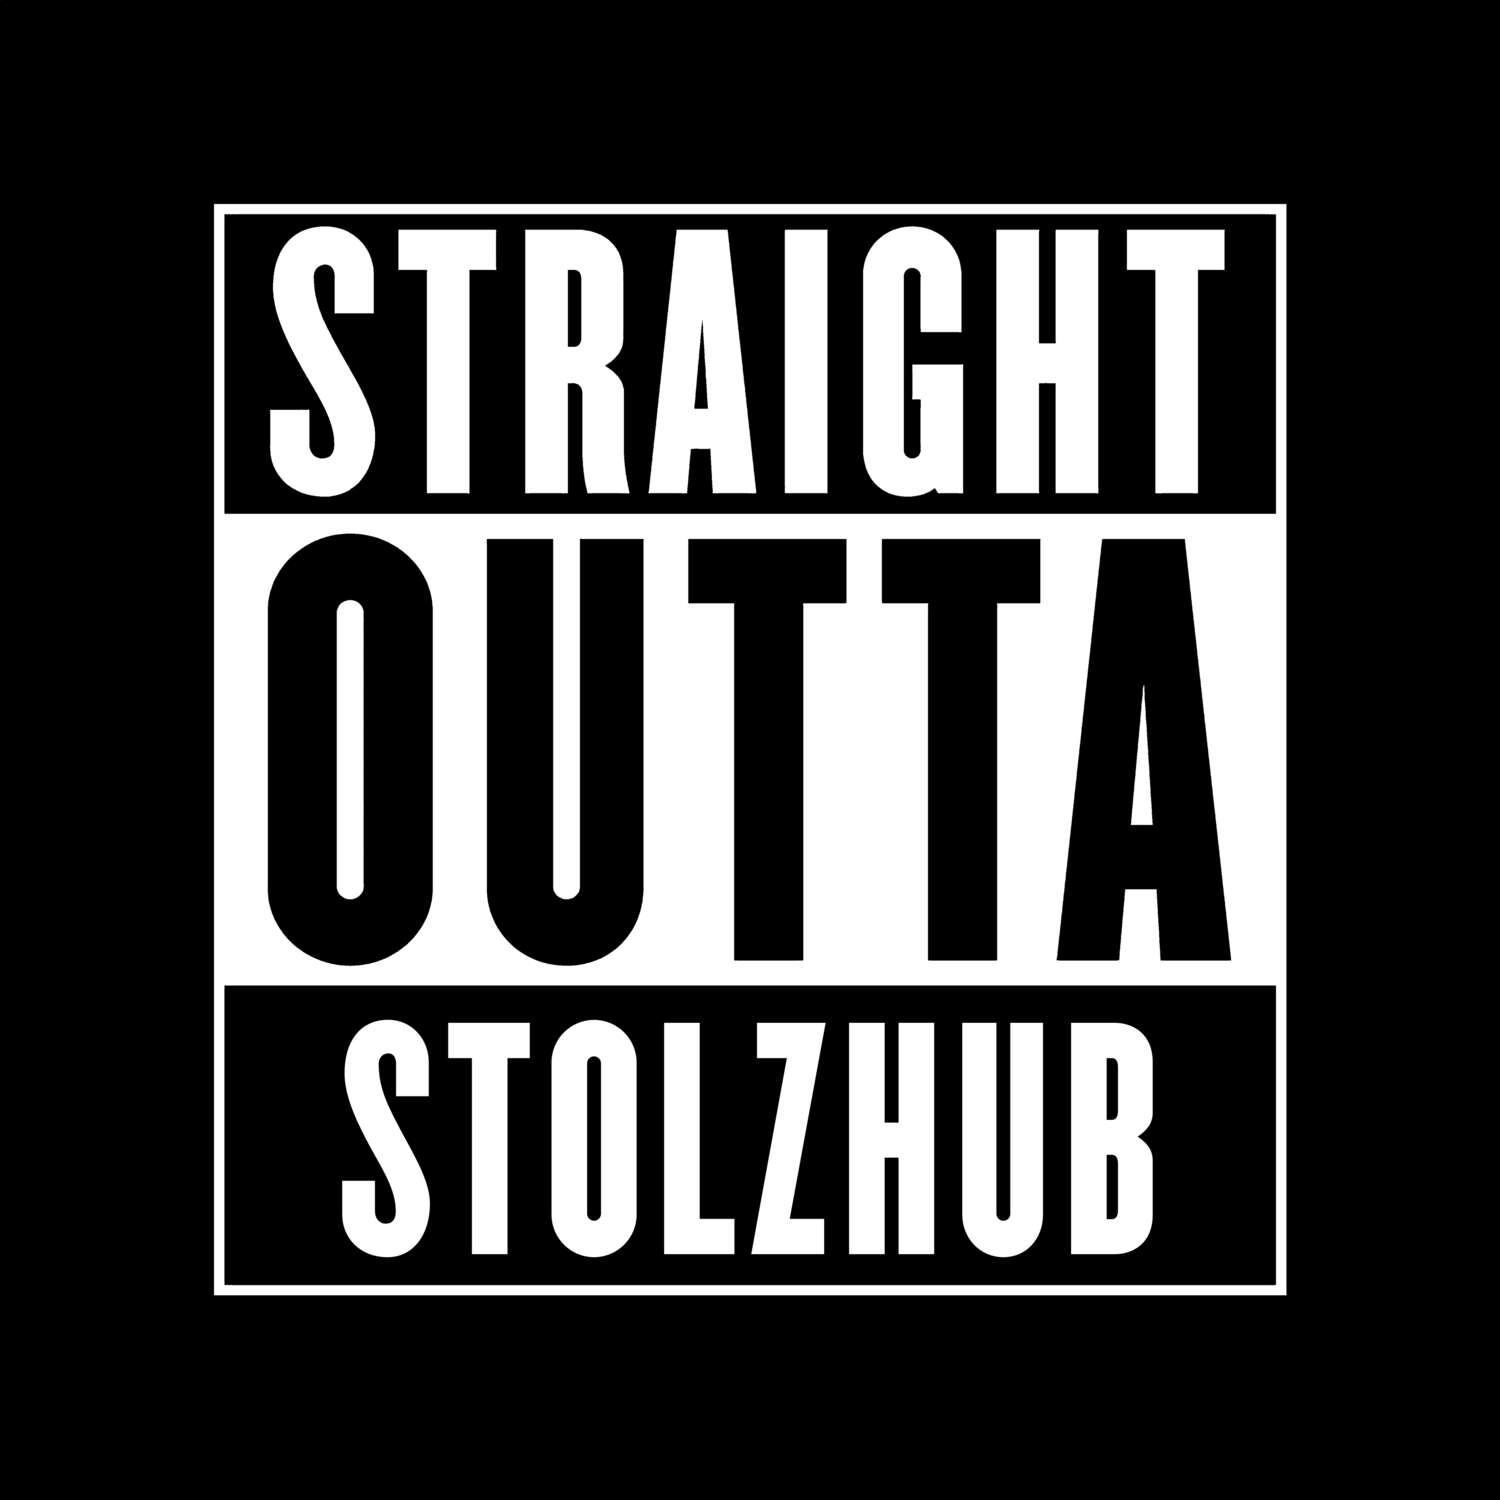 Stolzhub T-Shirt »Straight Outta«